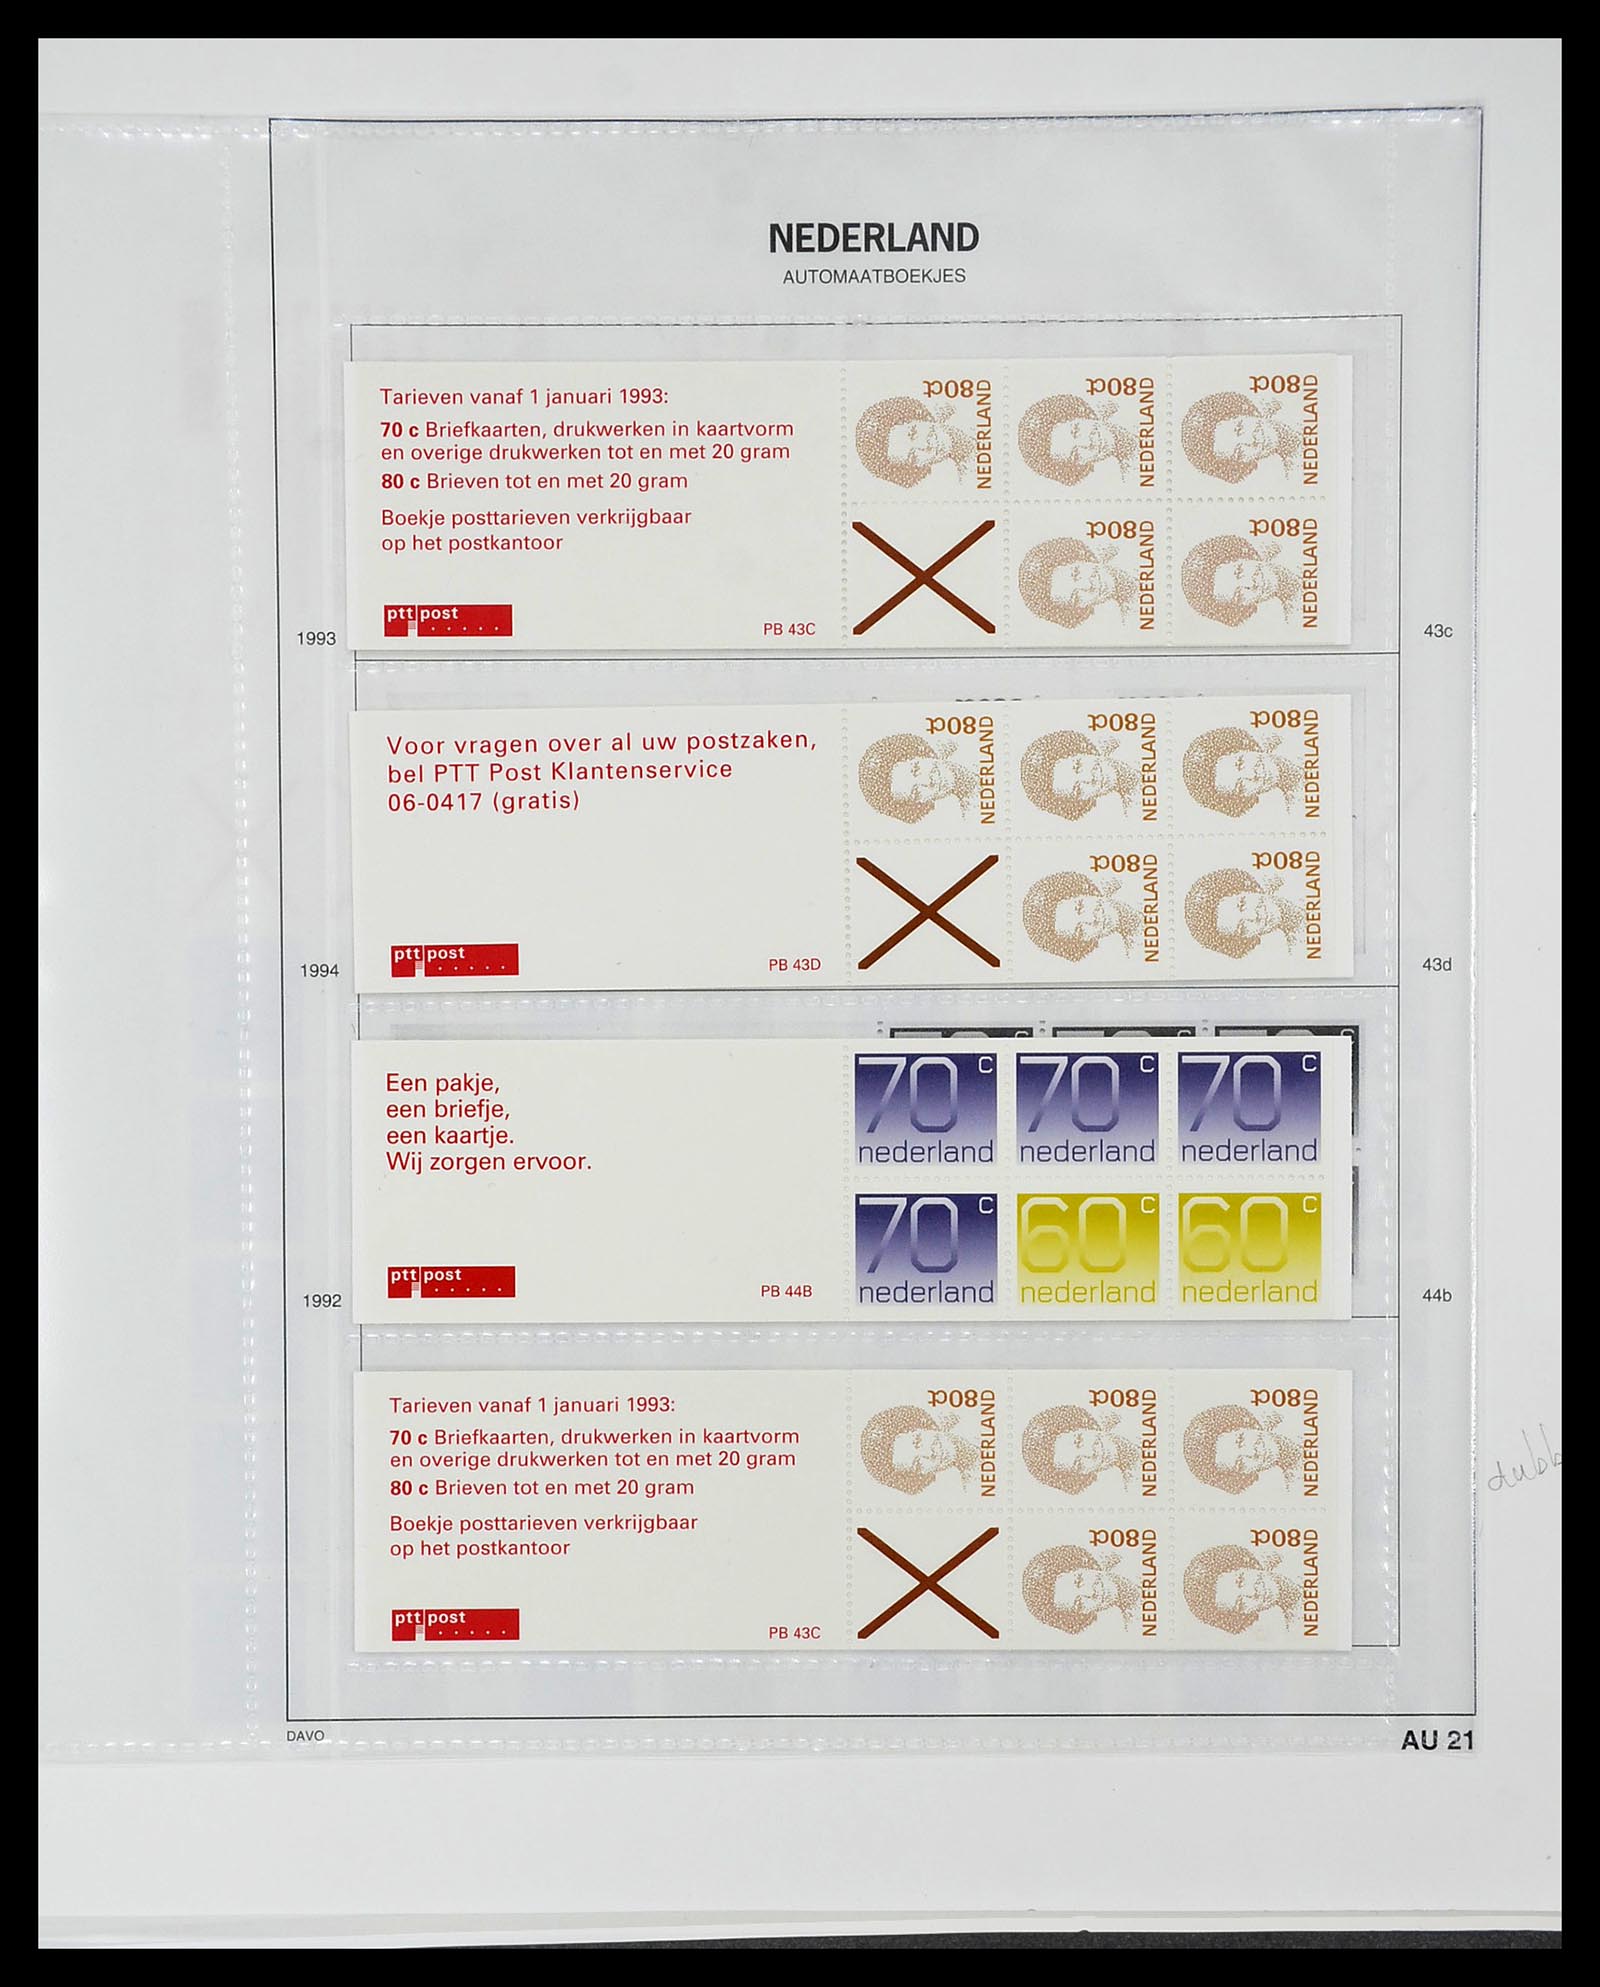 34701 023 - Stamp Collection 34701 Netherlands stamp booklets 1964-2001.